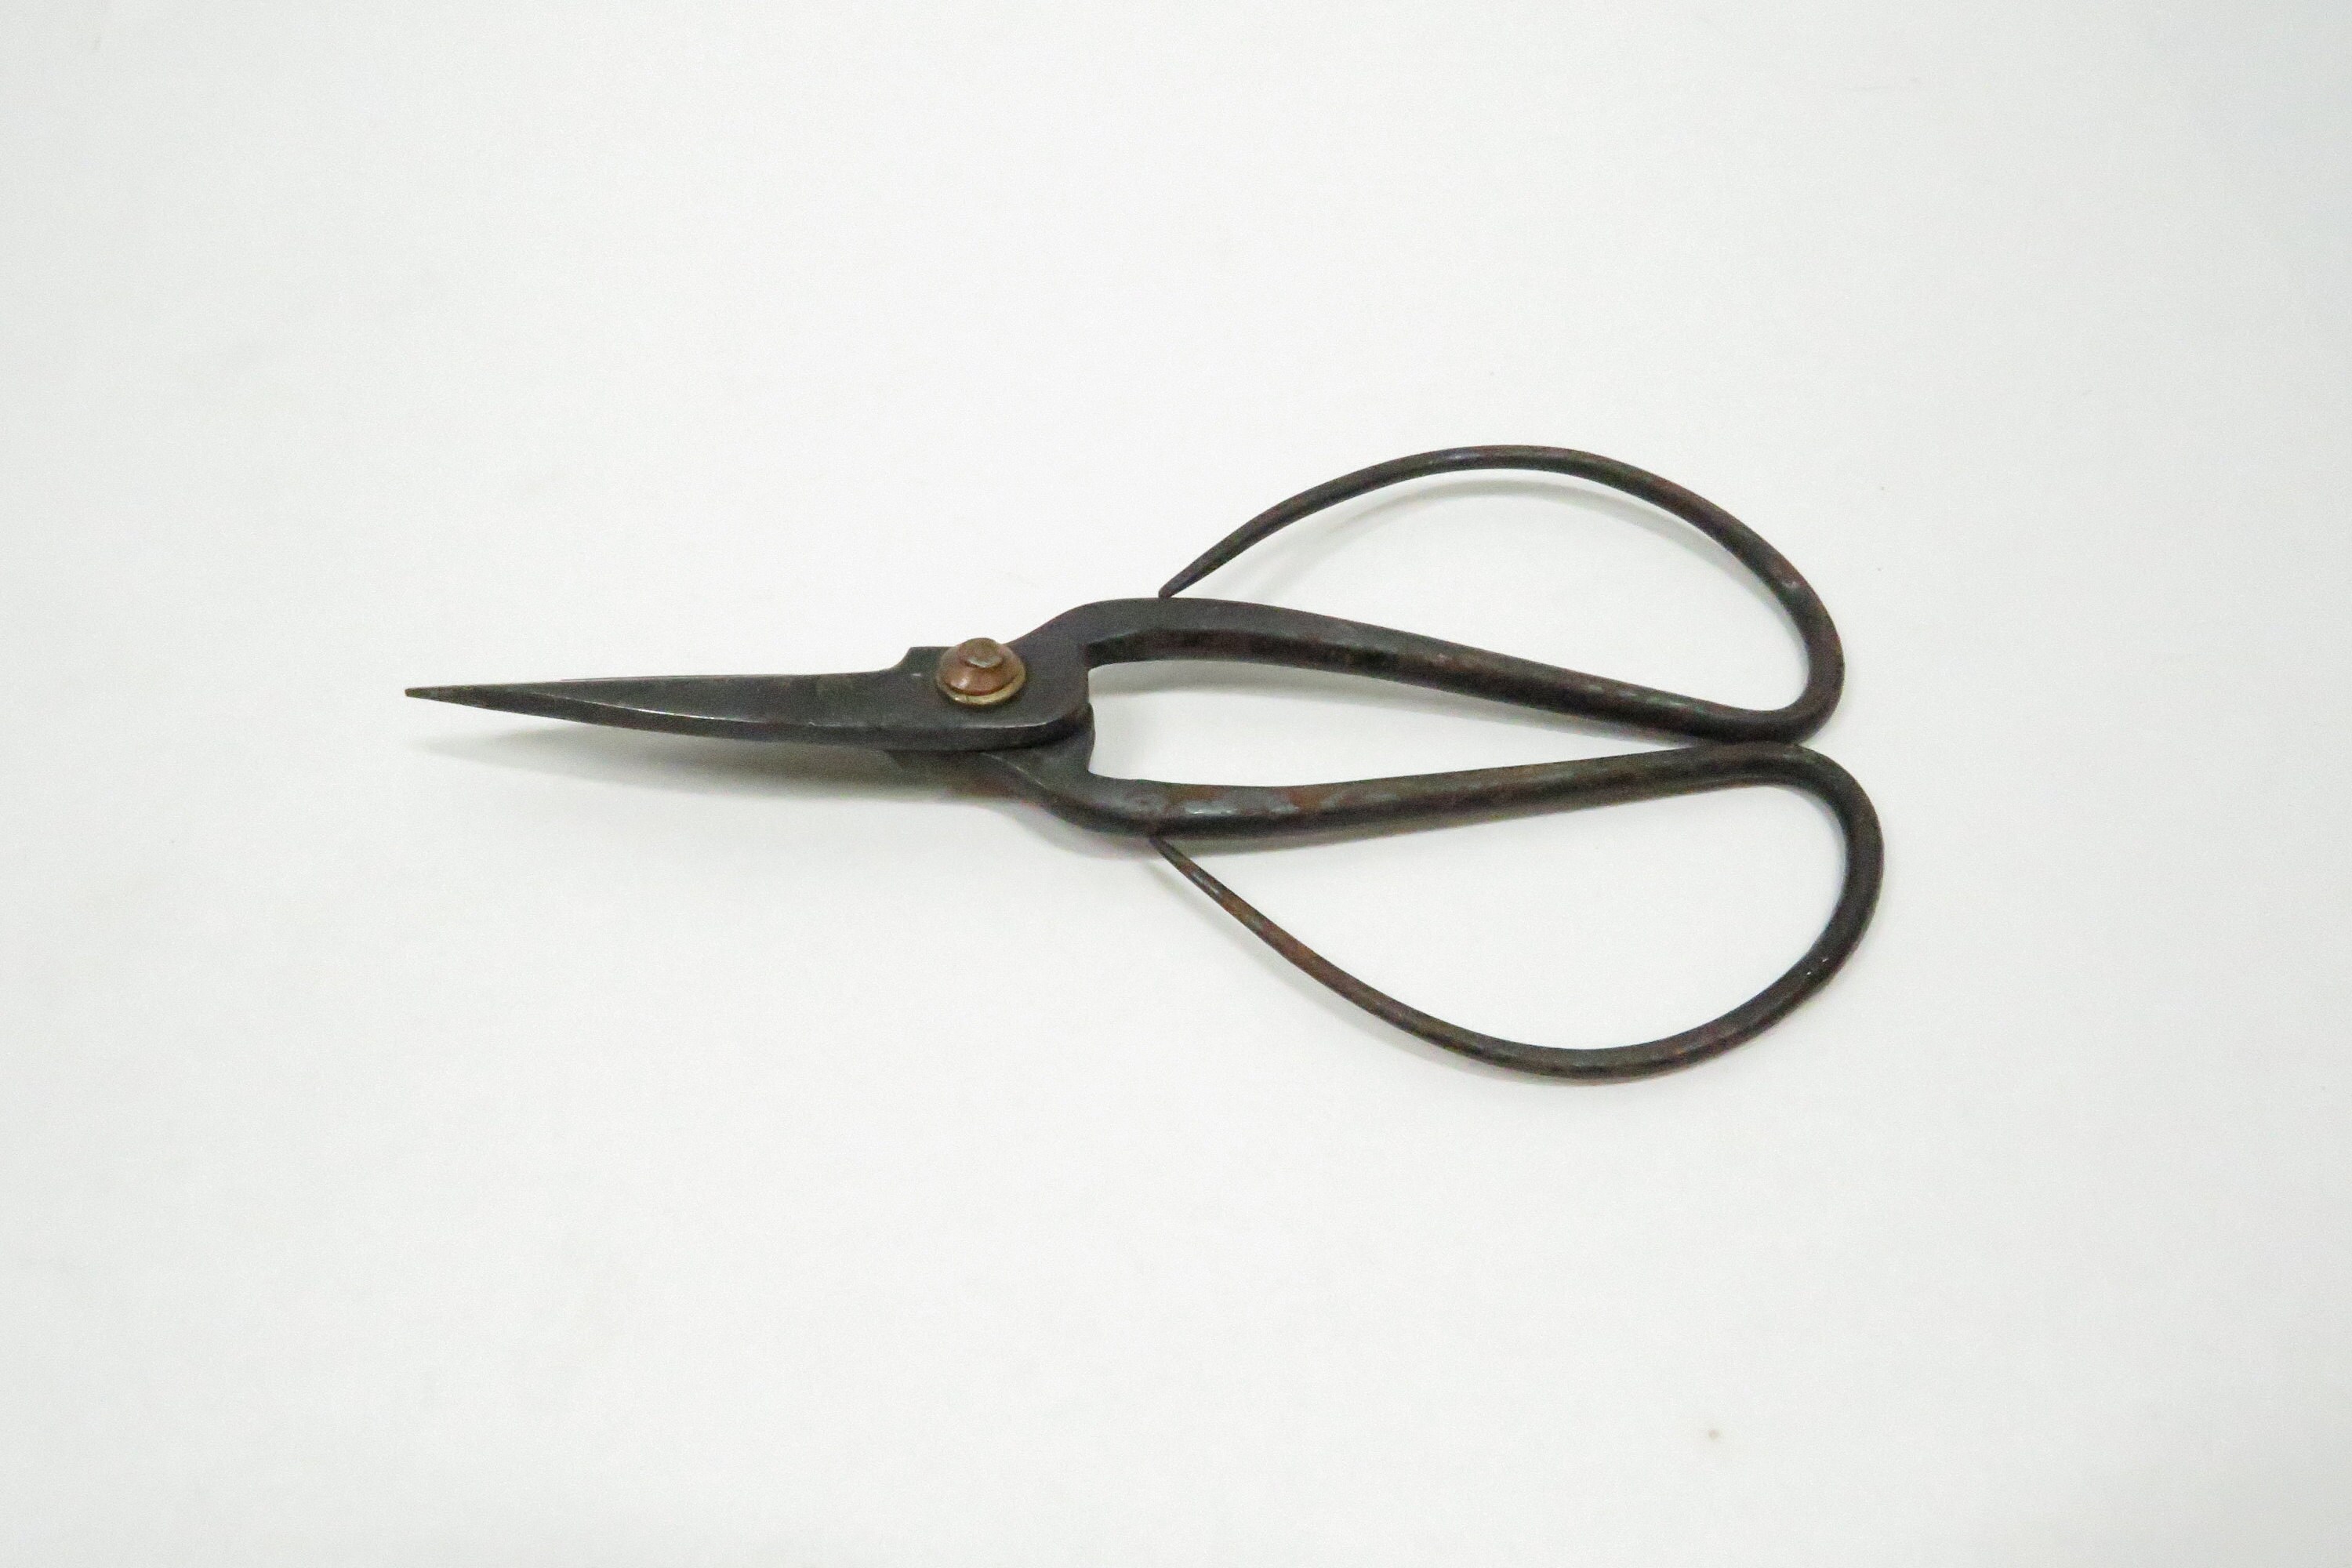 Antique Large Forged Scissors Huge Scissors for Cutting a Thick Cloth Metal  Scissors Large Vintage Scissors Primitive Scissors 